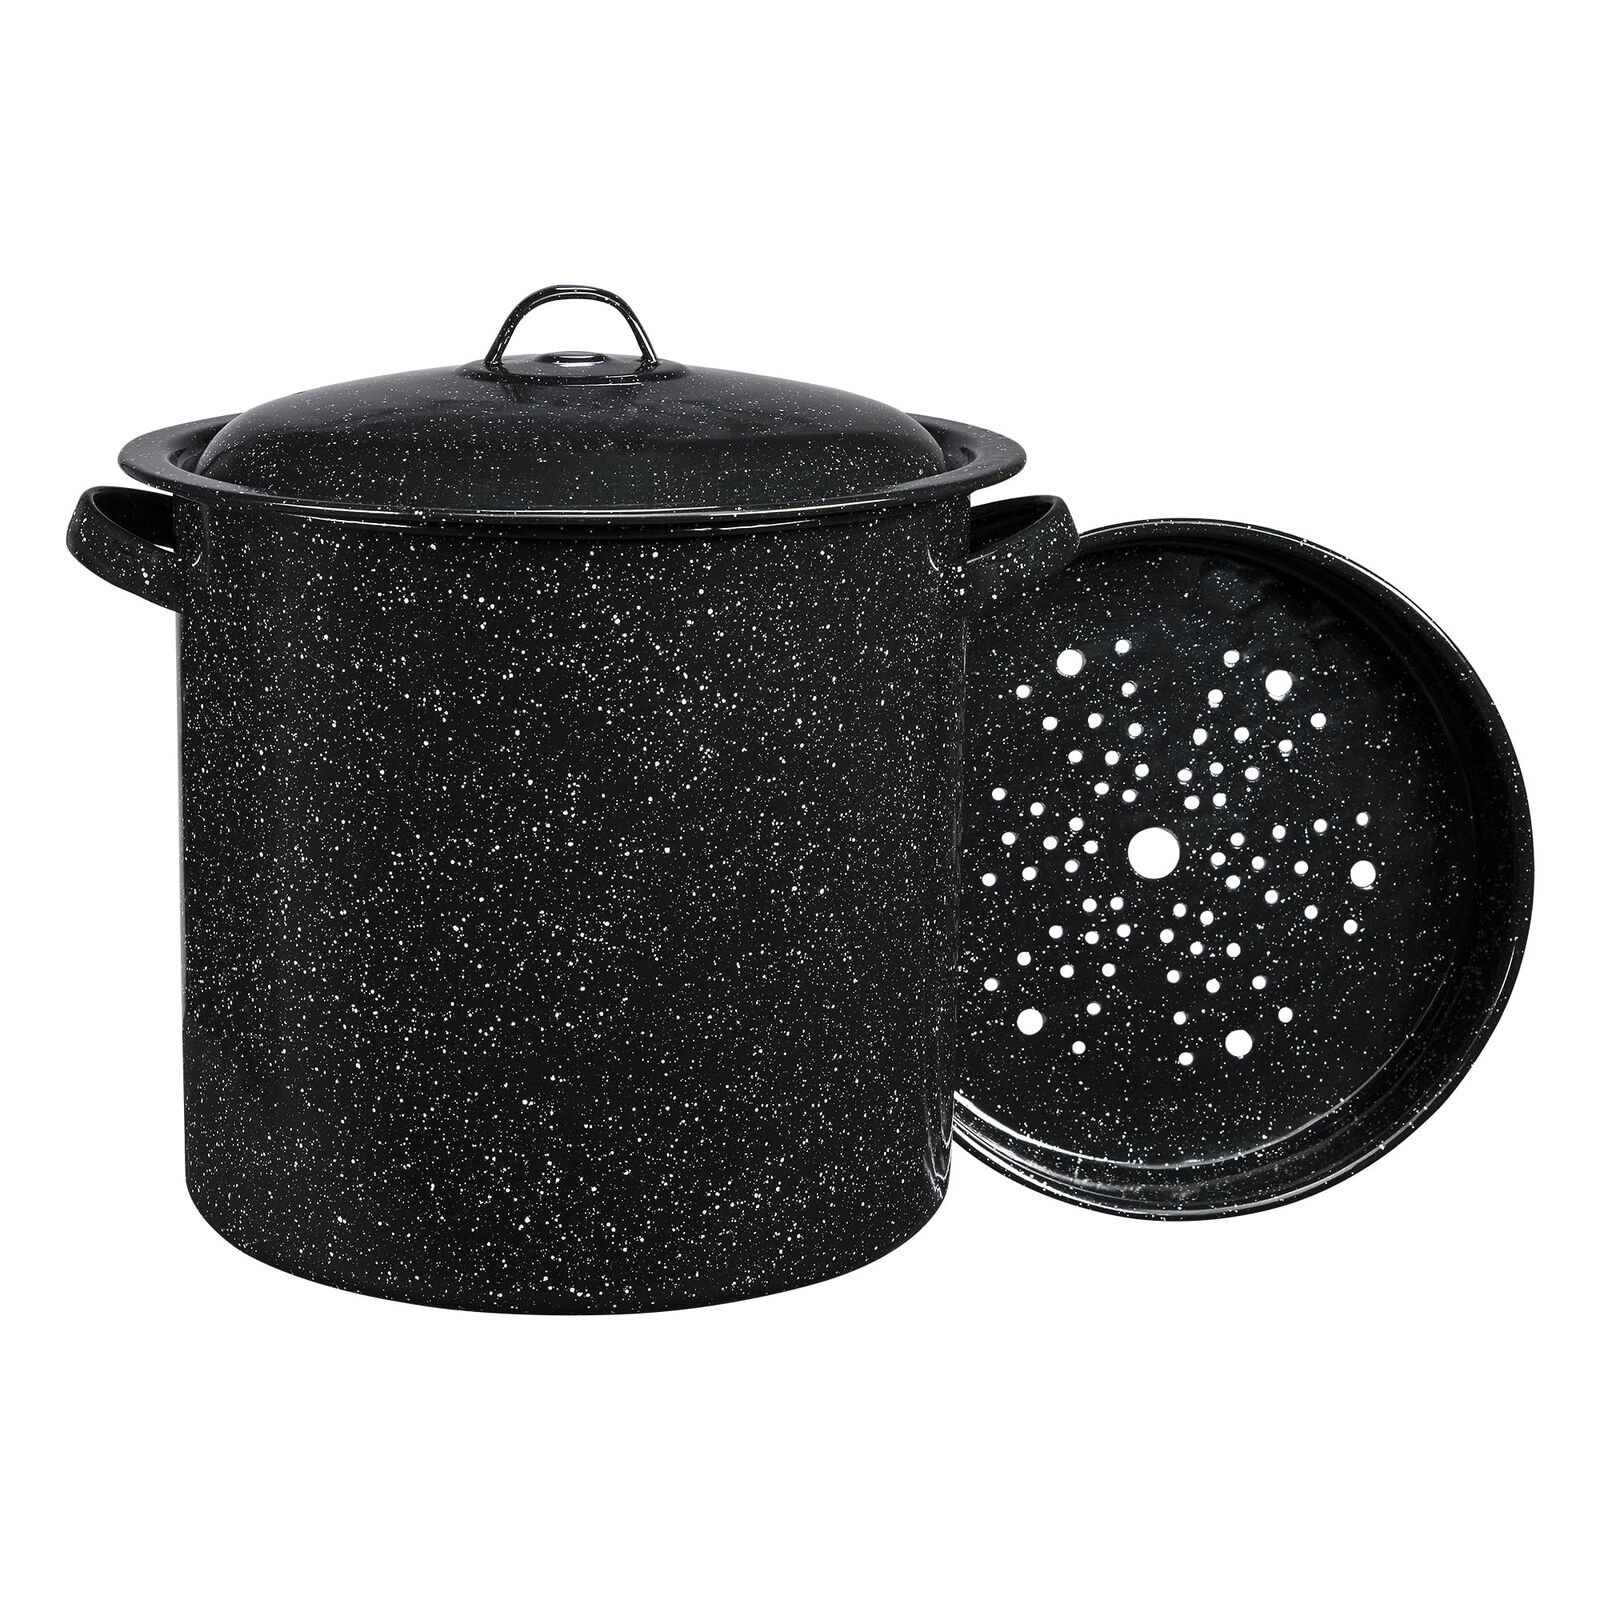  Enamel on Steel Multiuse Pot, Seafood / Tamale / Stock Pot，15.5-Quart, Black